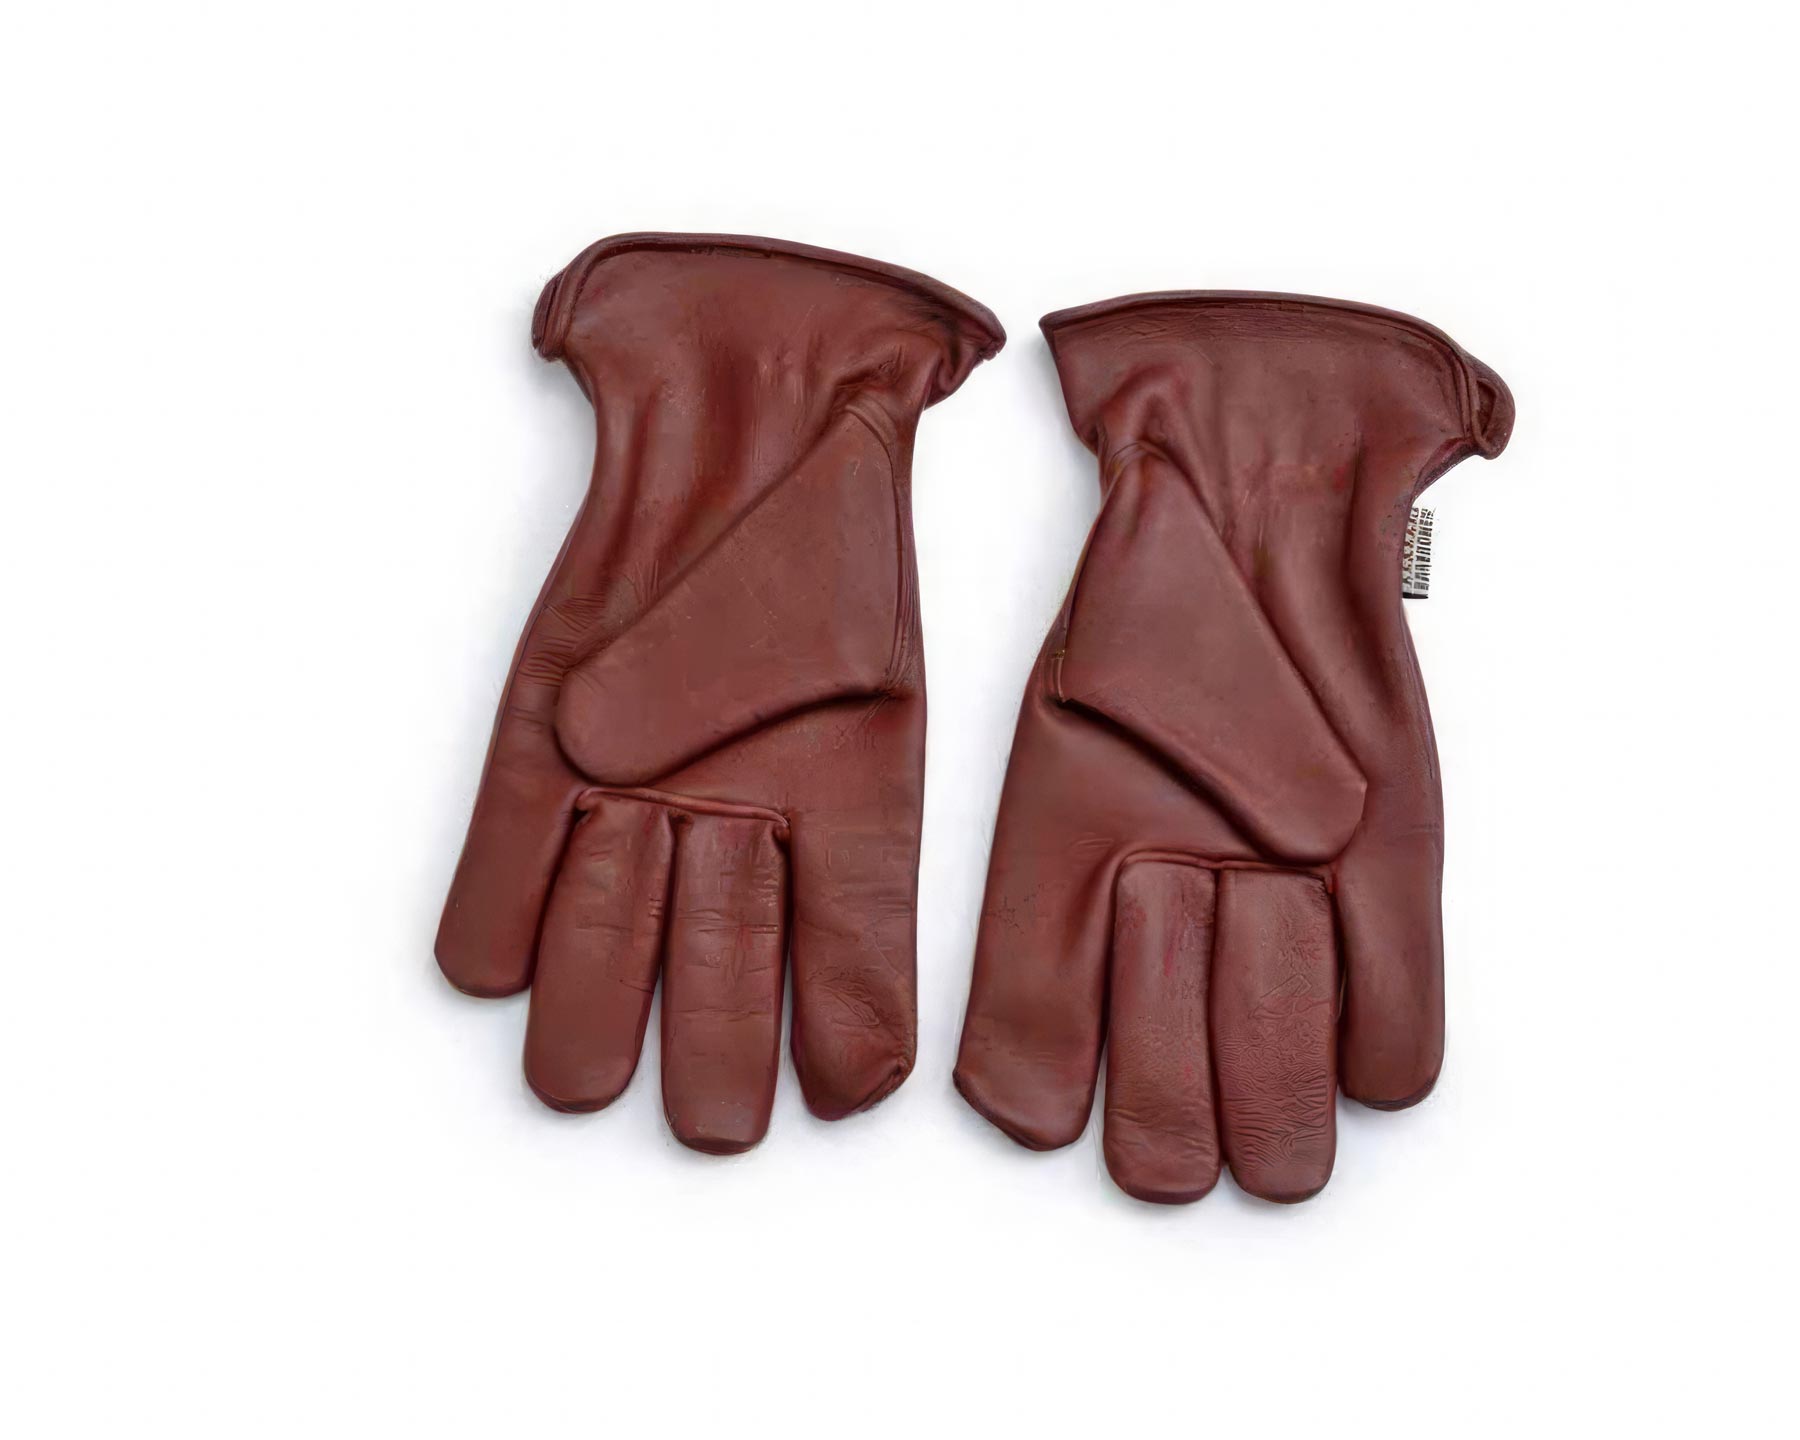 https://www.gardensonline.com.au/Uploads/Product/11682/Barebones-Classic-Work-Glove-Cognac-Underside-3a.jpg